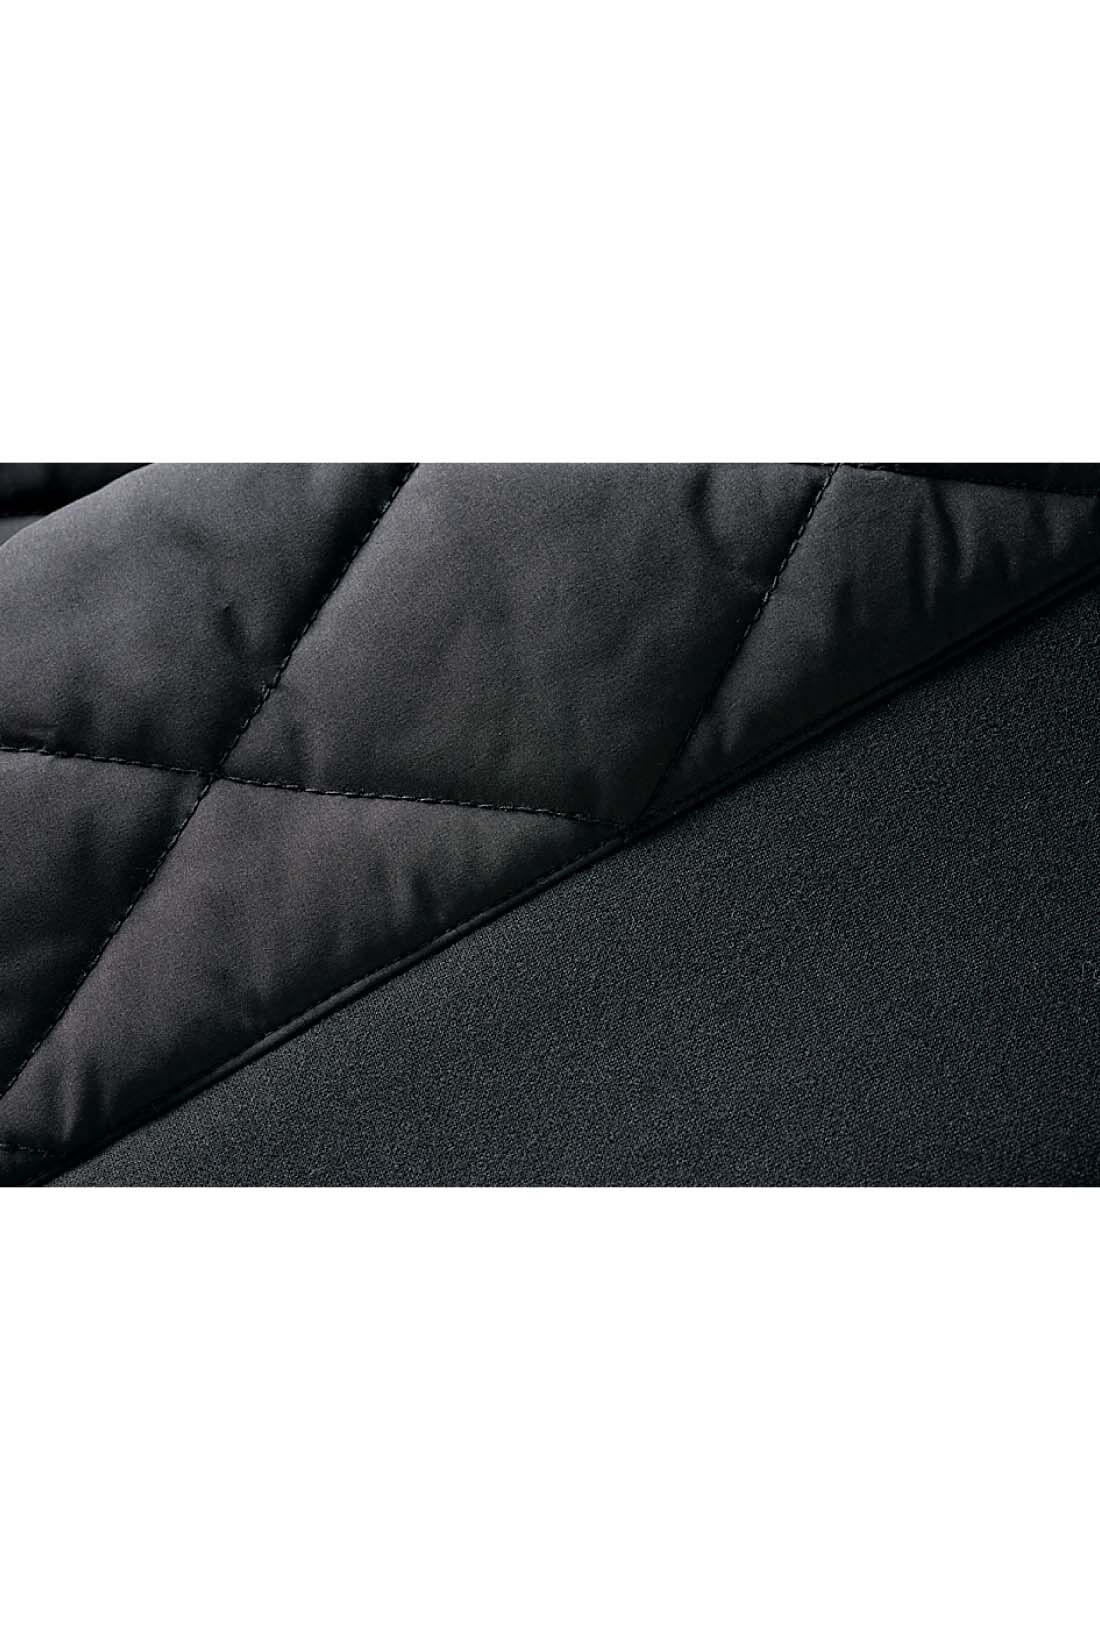 DRECO by IEDIT|IEDIT[イディット]　シルエット変化を楽しむ ダンボール素材×キルティングの切り替えデザインコート〈ブラック〉|軽く暖かな中わた入りのキルティング素材と、すっきりきれい見えするダンボール素材の異素材コンビが新鮮。